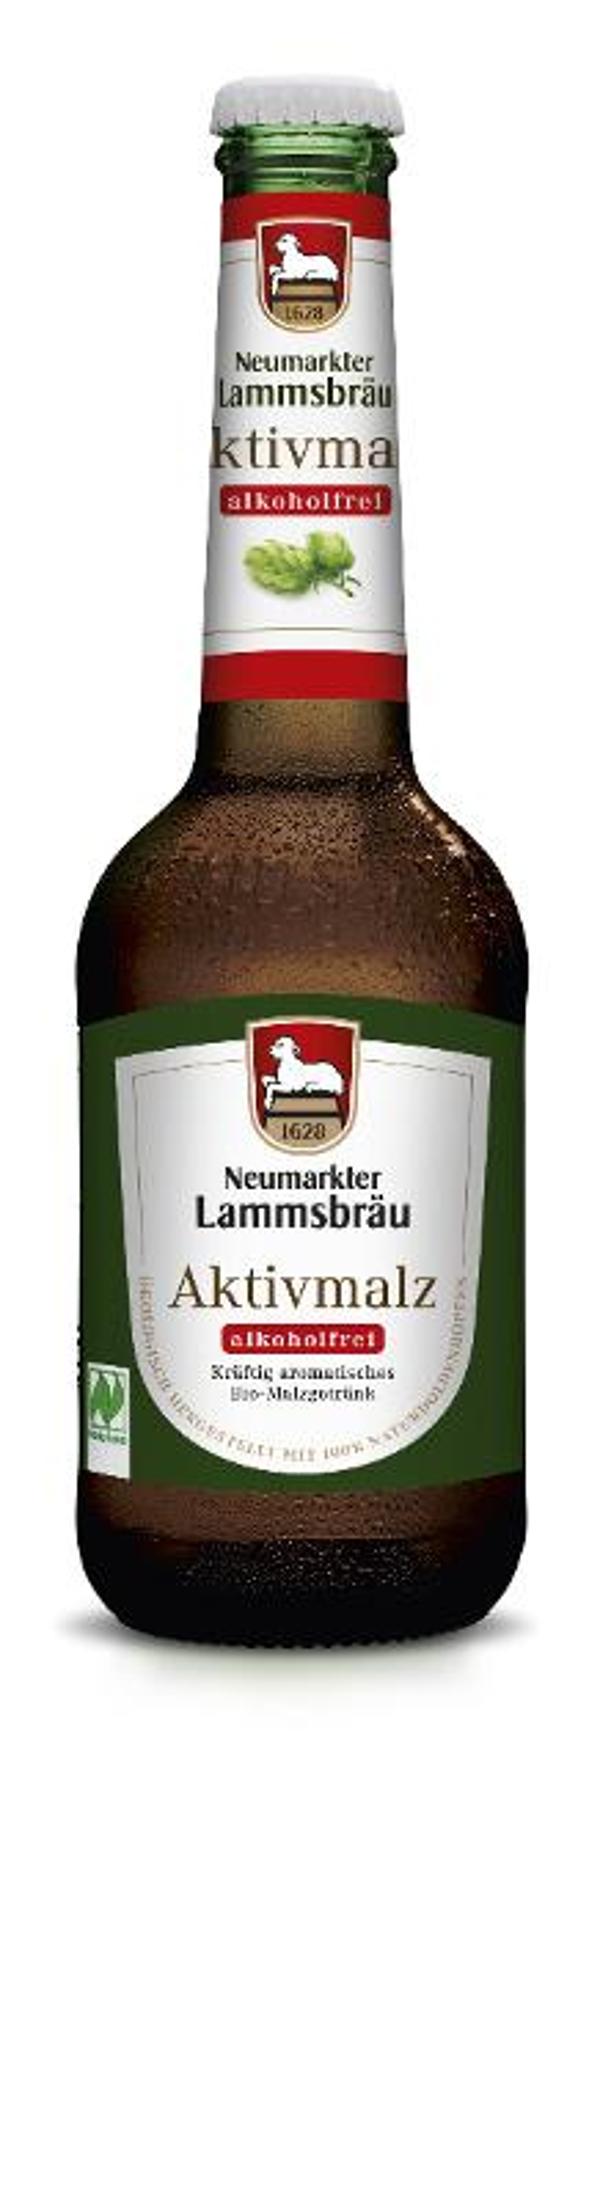 Produktfoto zu Aktivmalz Alkoholfrei 0,33 l Neumarkter Lammsbräu